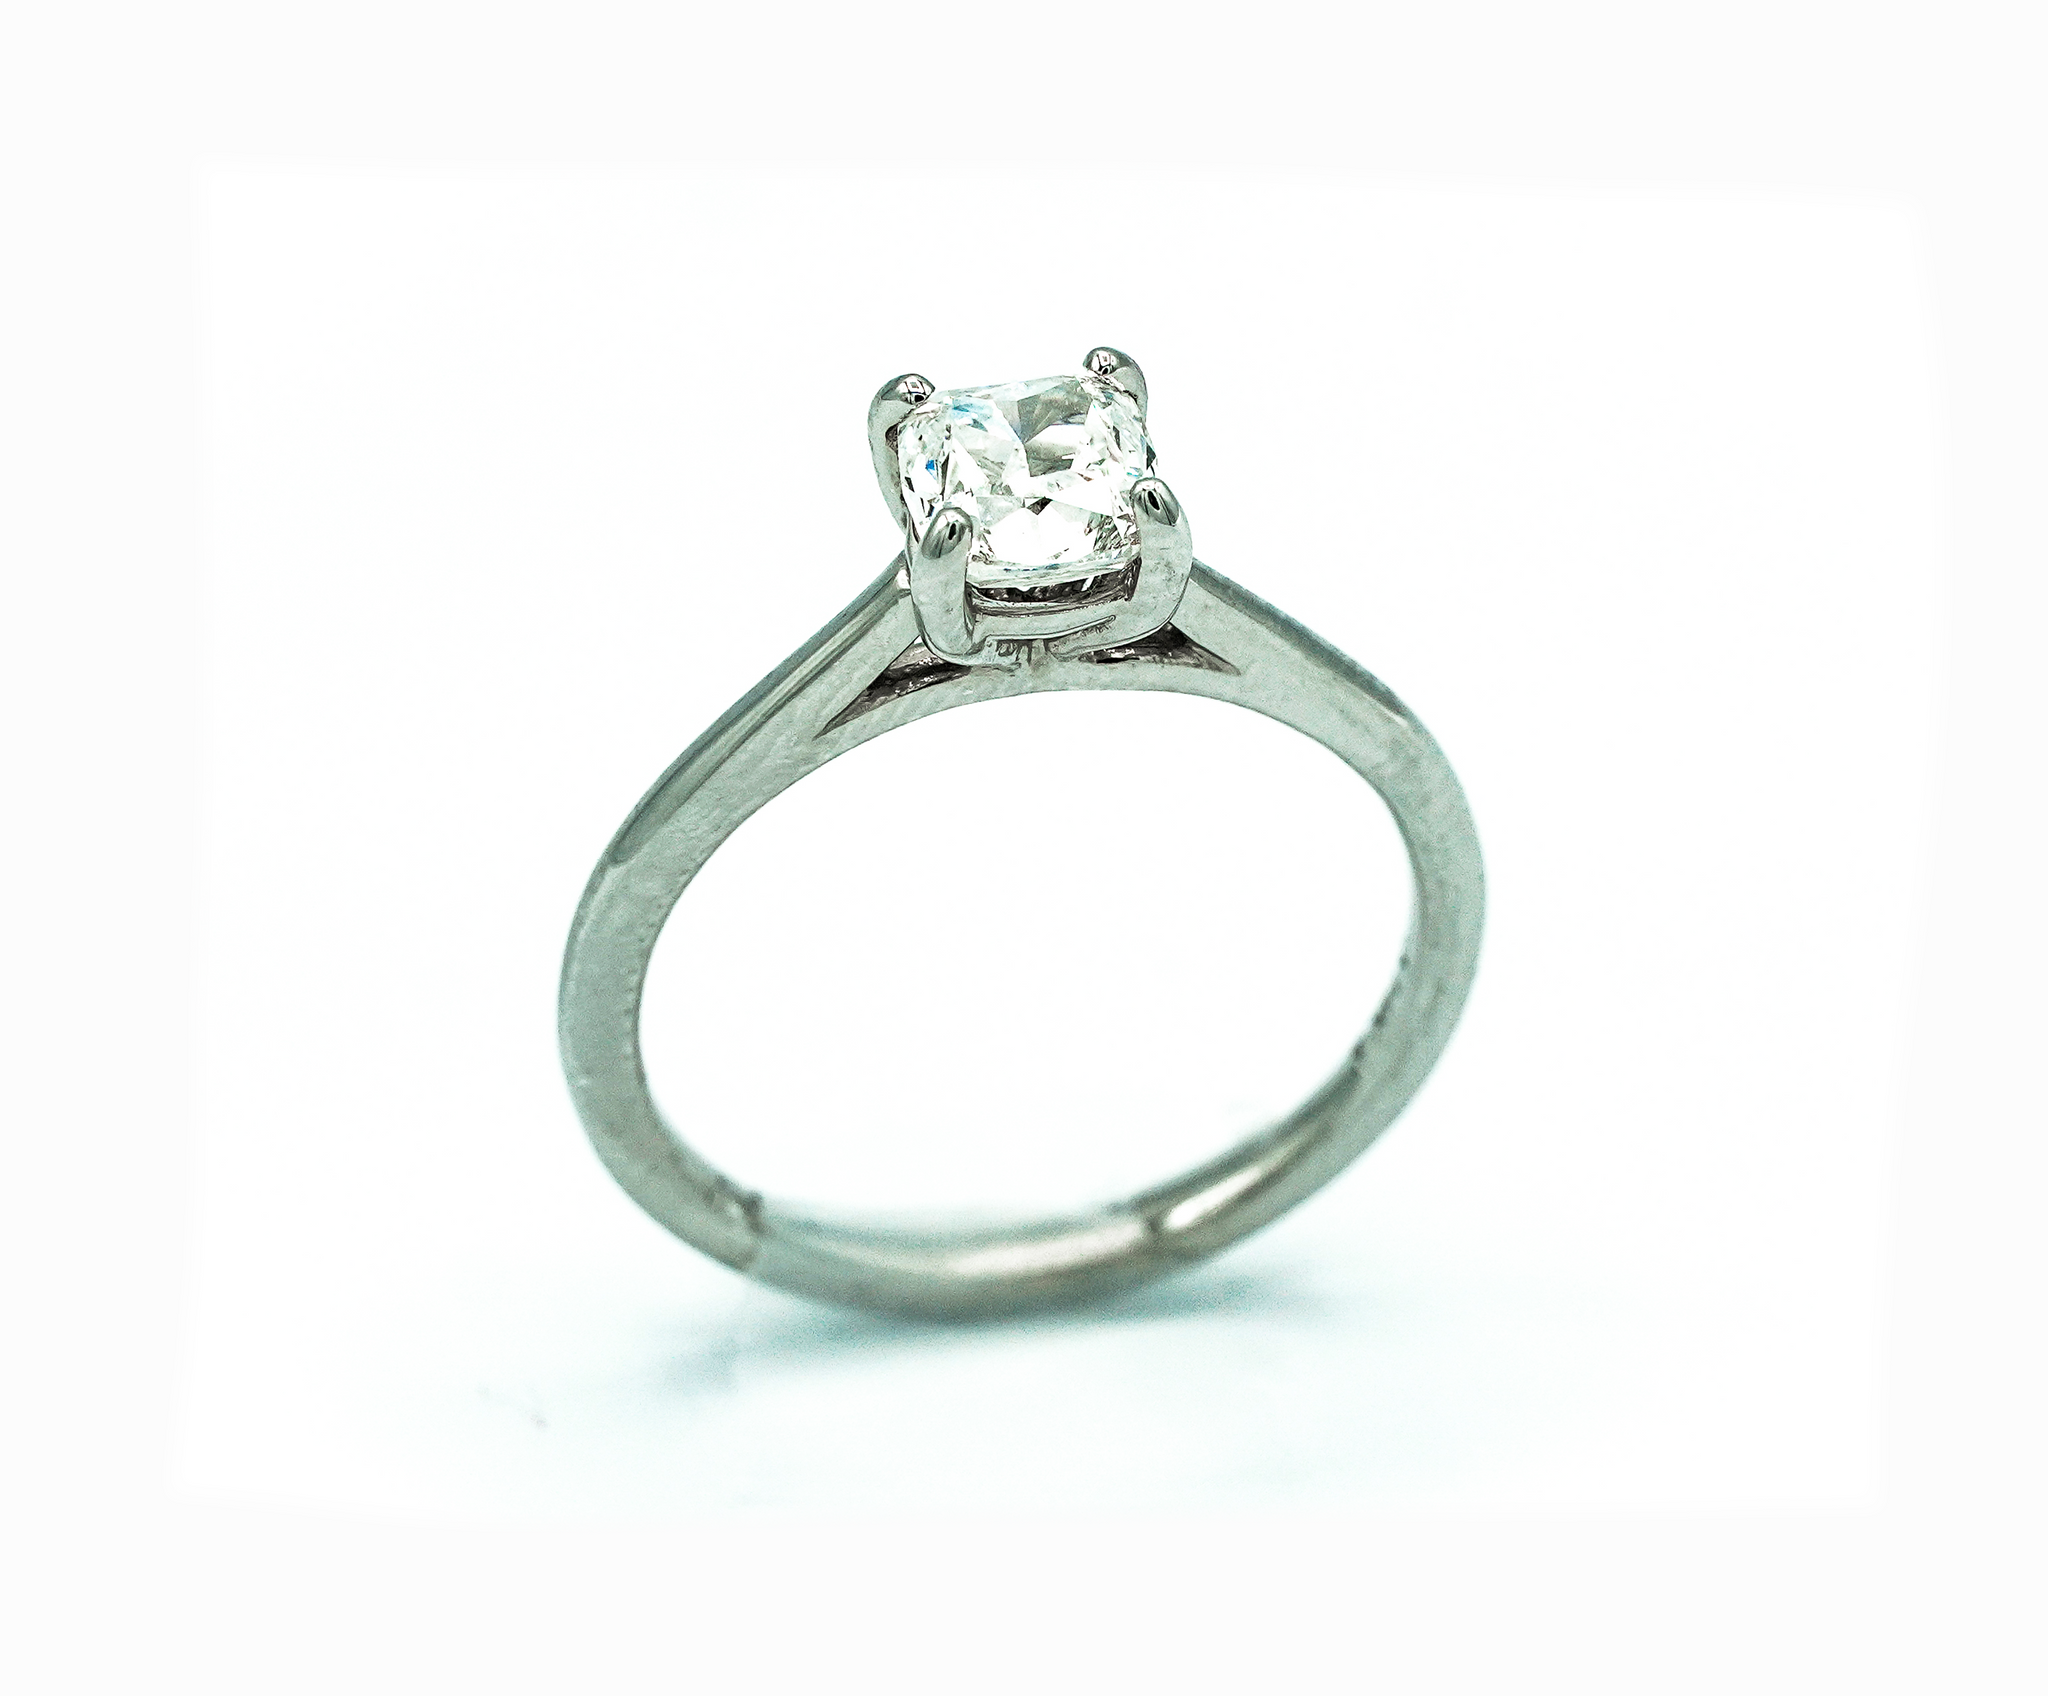 Montalvo Diamonds - Cushion Modified Brilliant Cut Solitaire Ring in 14kt White Gold